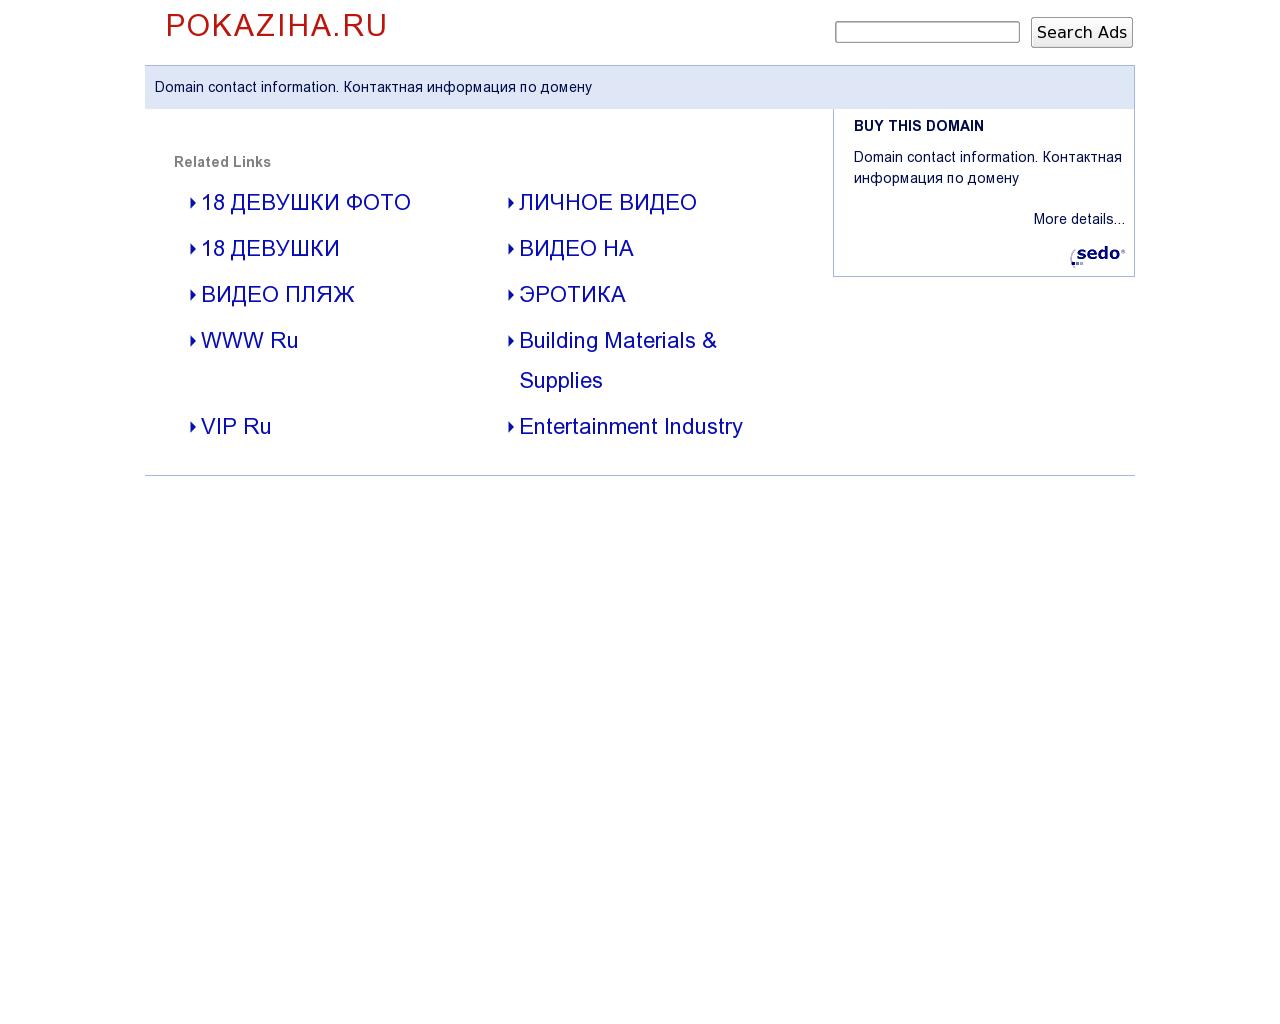 Изображение сайта pokaziha.ru в разрешении 1280x1024